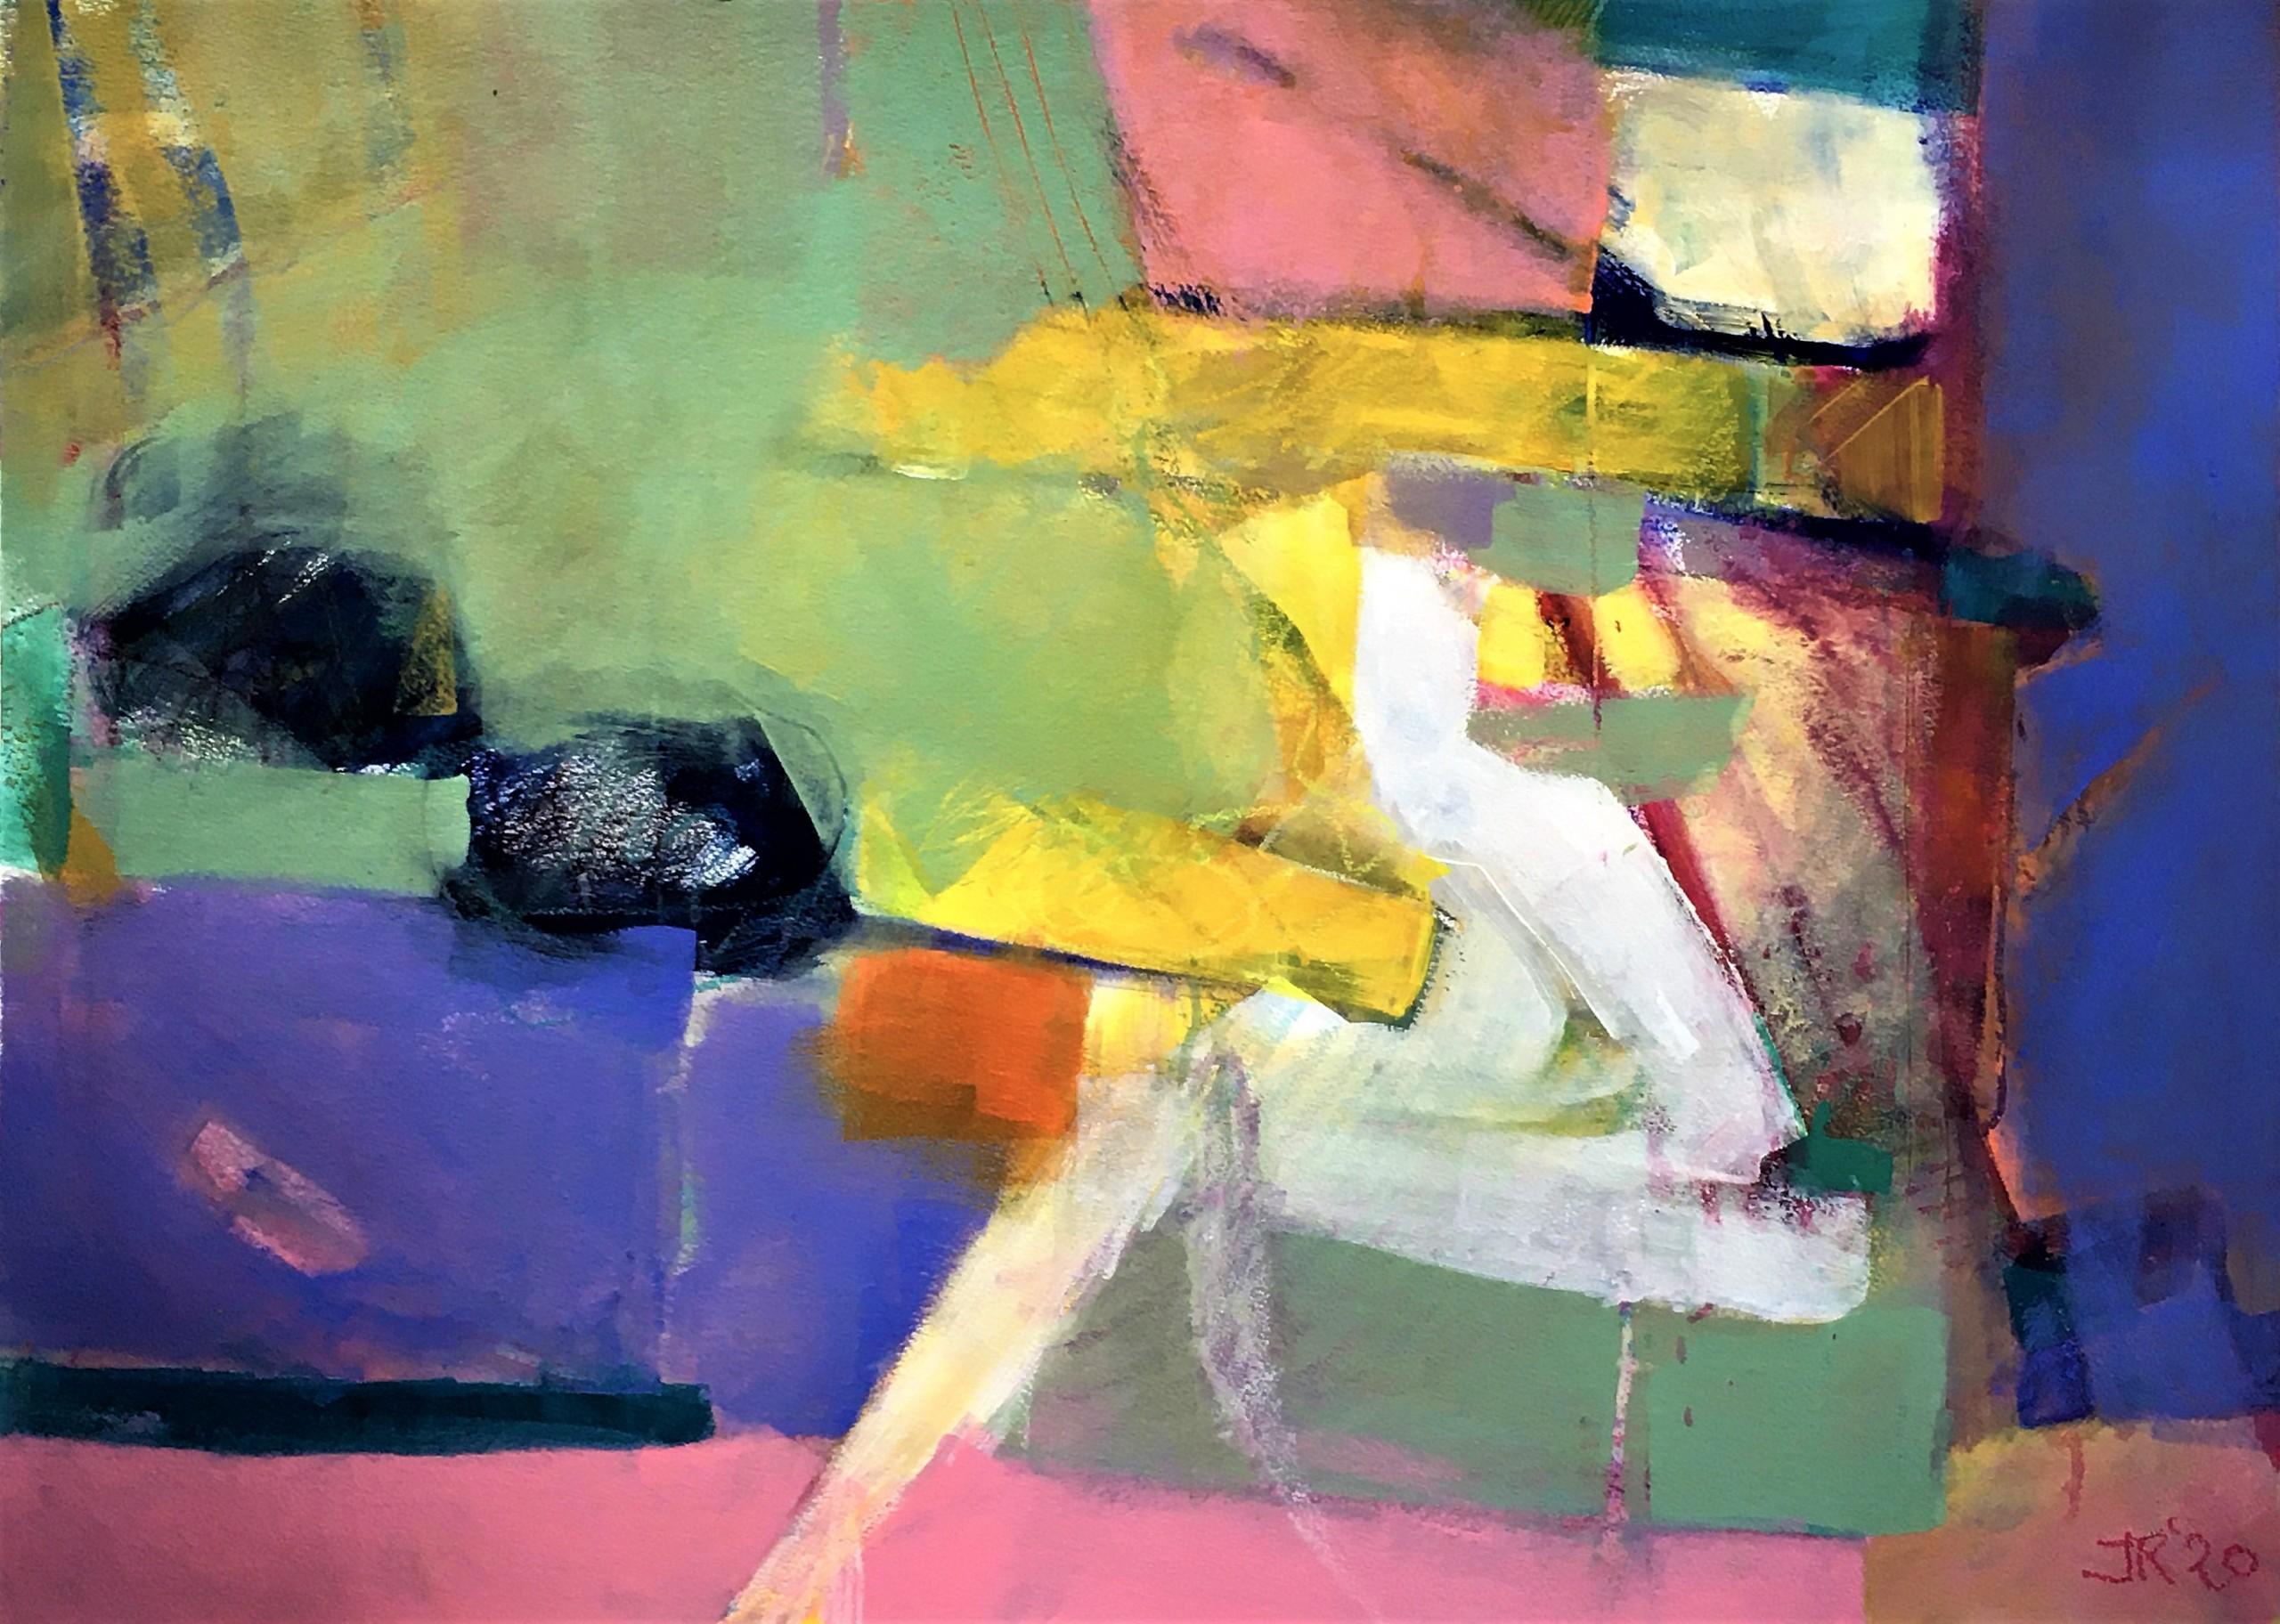 Abstract Painting Jon Rowland - Danseuse en train de se reposer